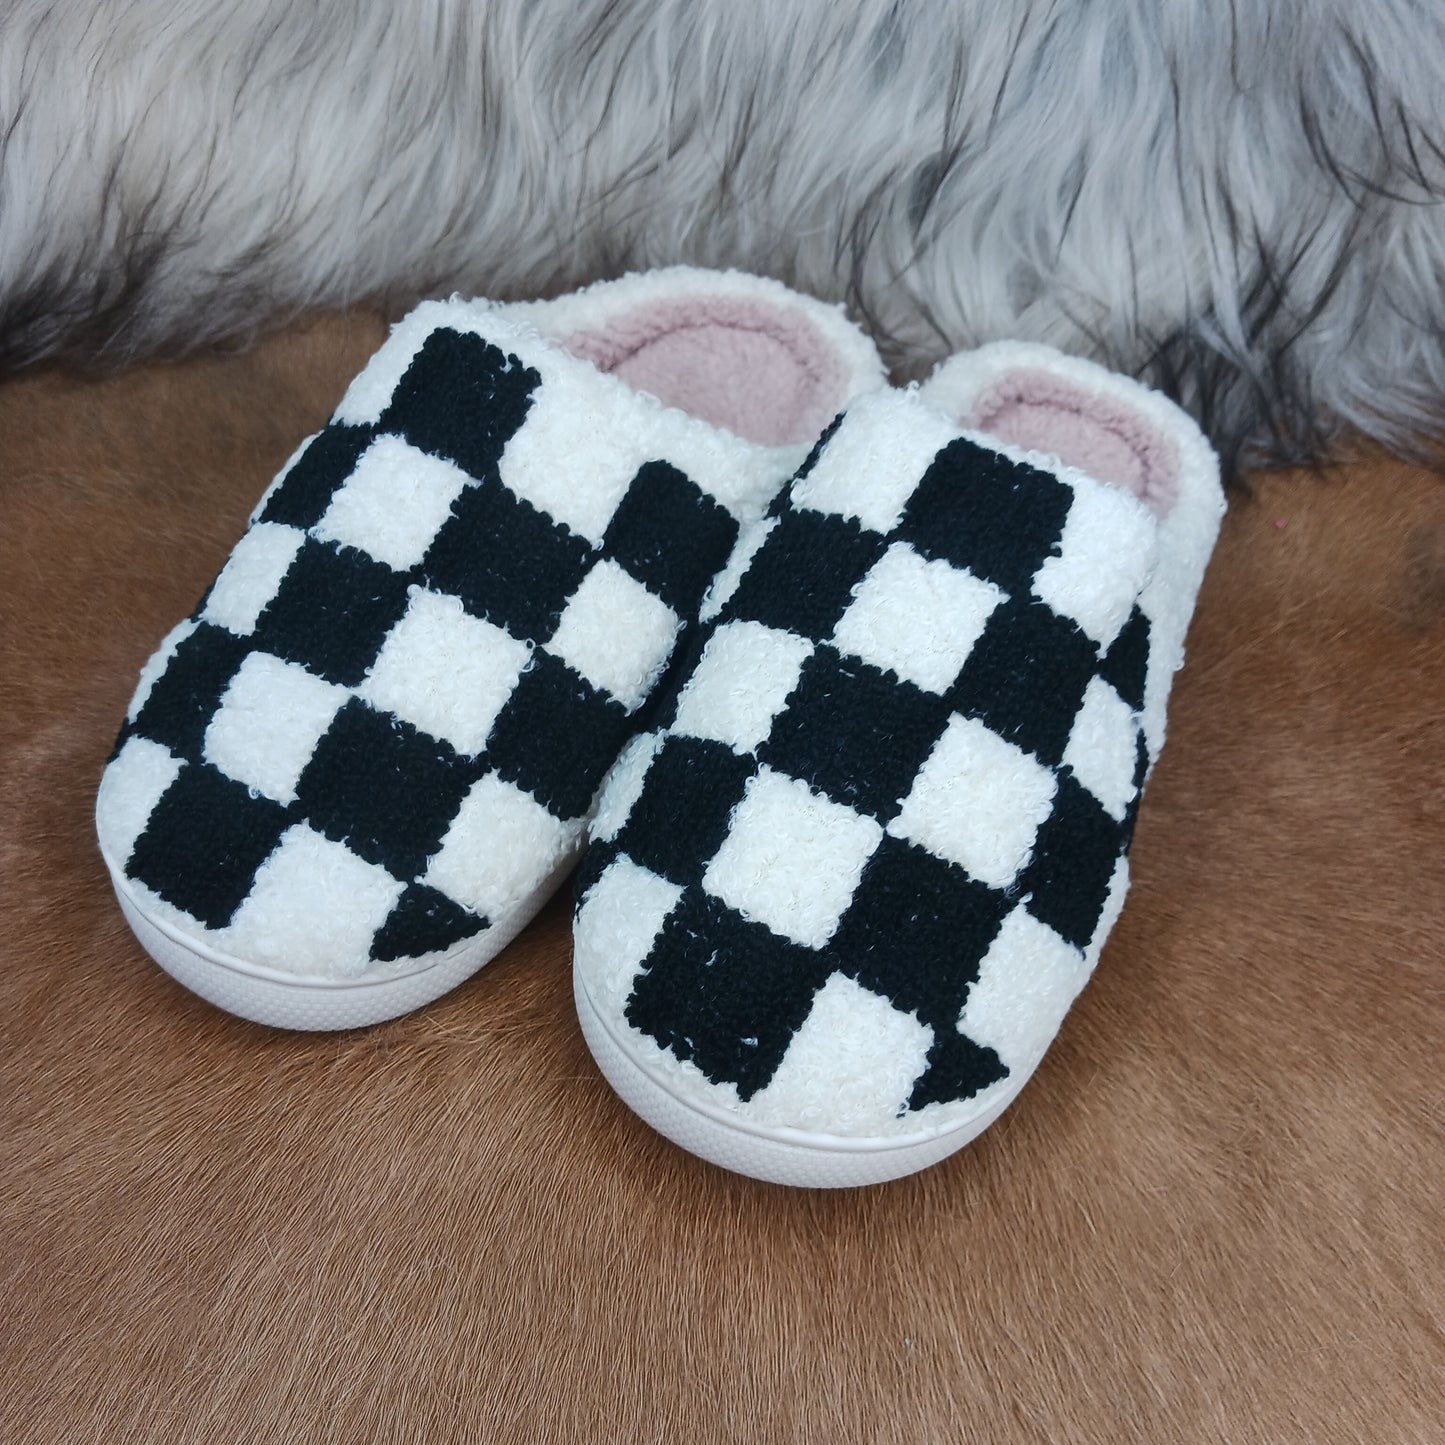 Checker Slippers